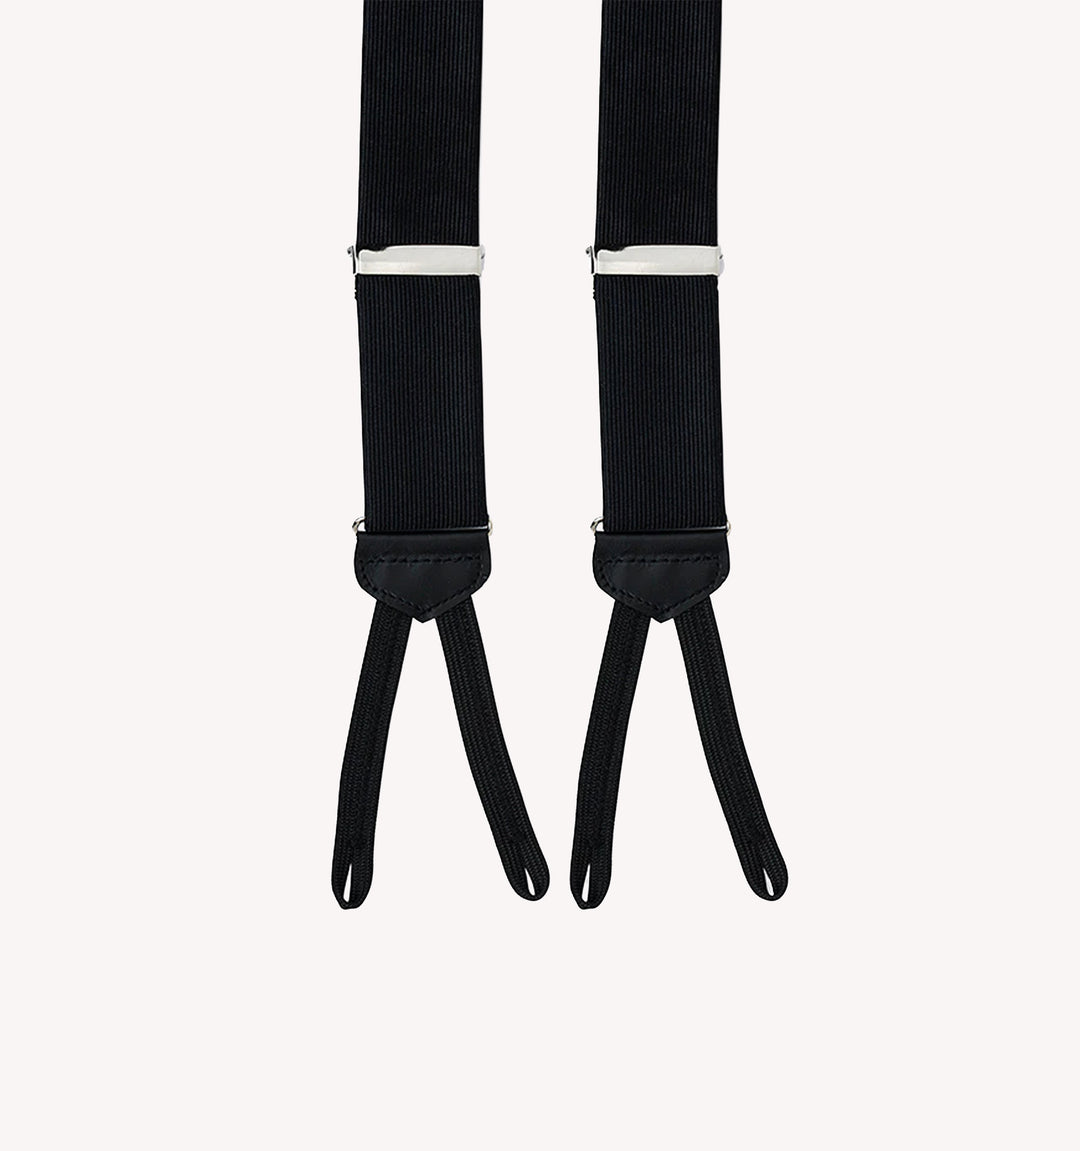 R. Hanauer Faille Suspenders in Black